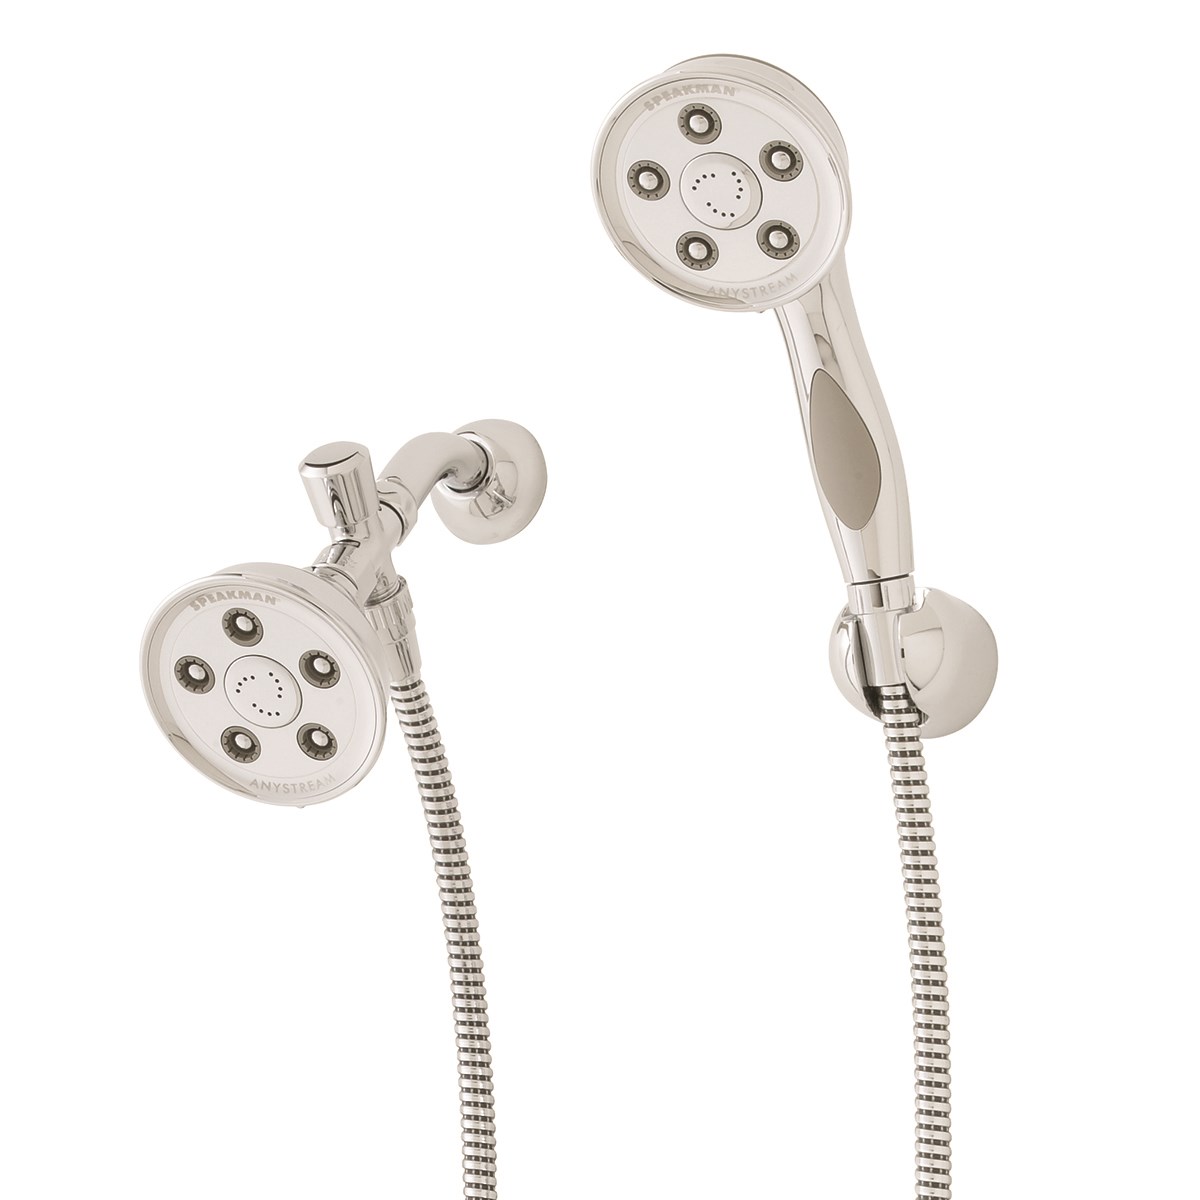 Speakman Caspian VS-113014 2.5 gpm Hand Shower with Shower